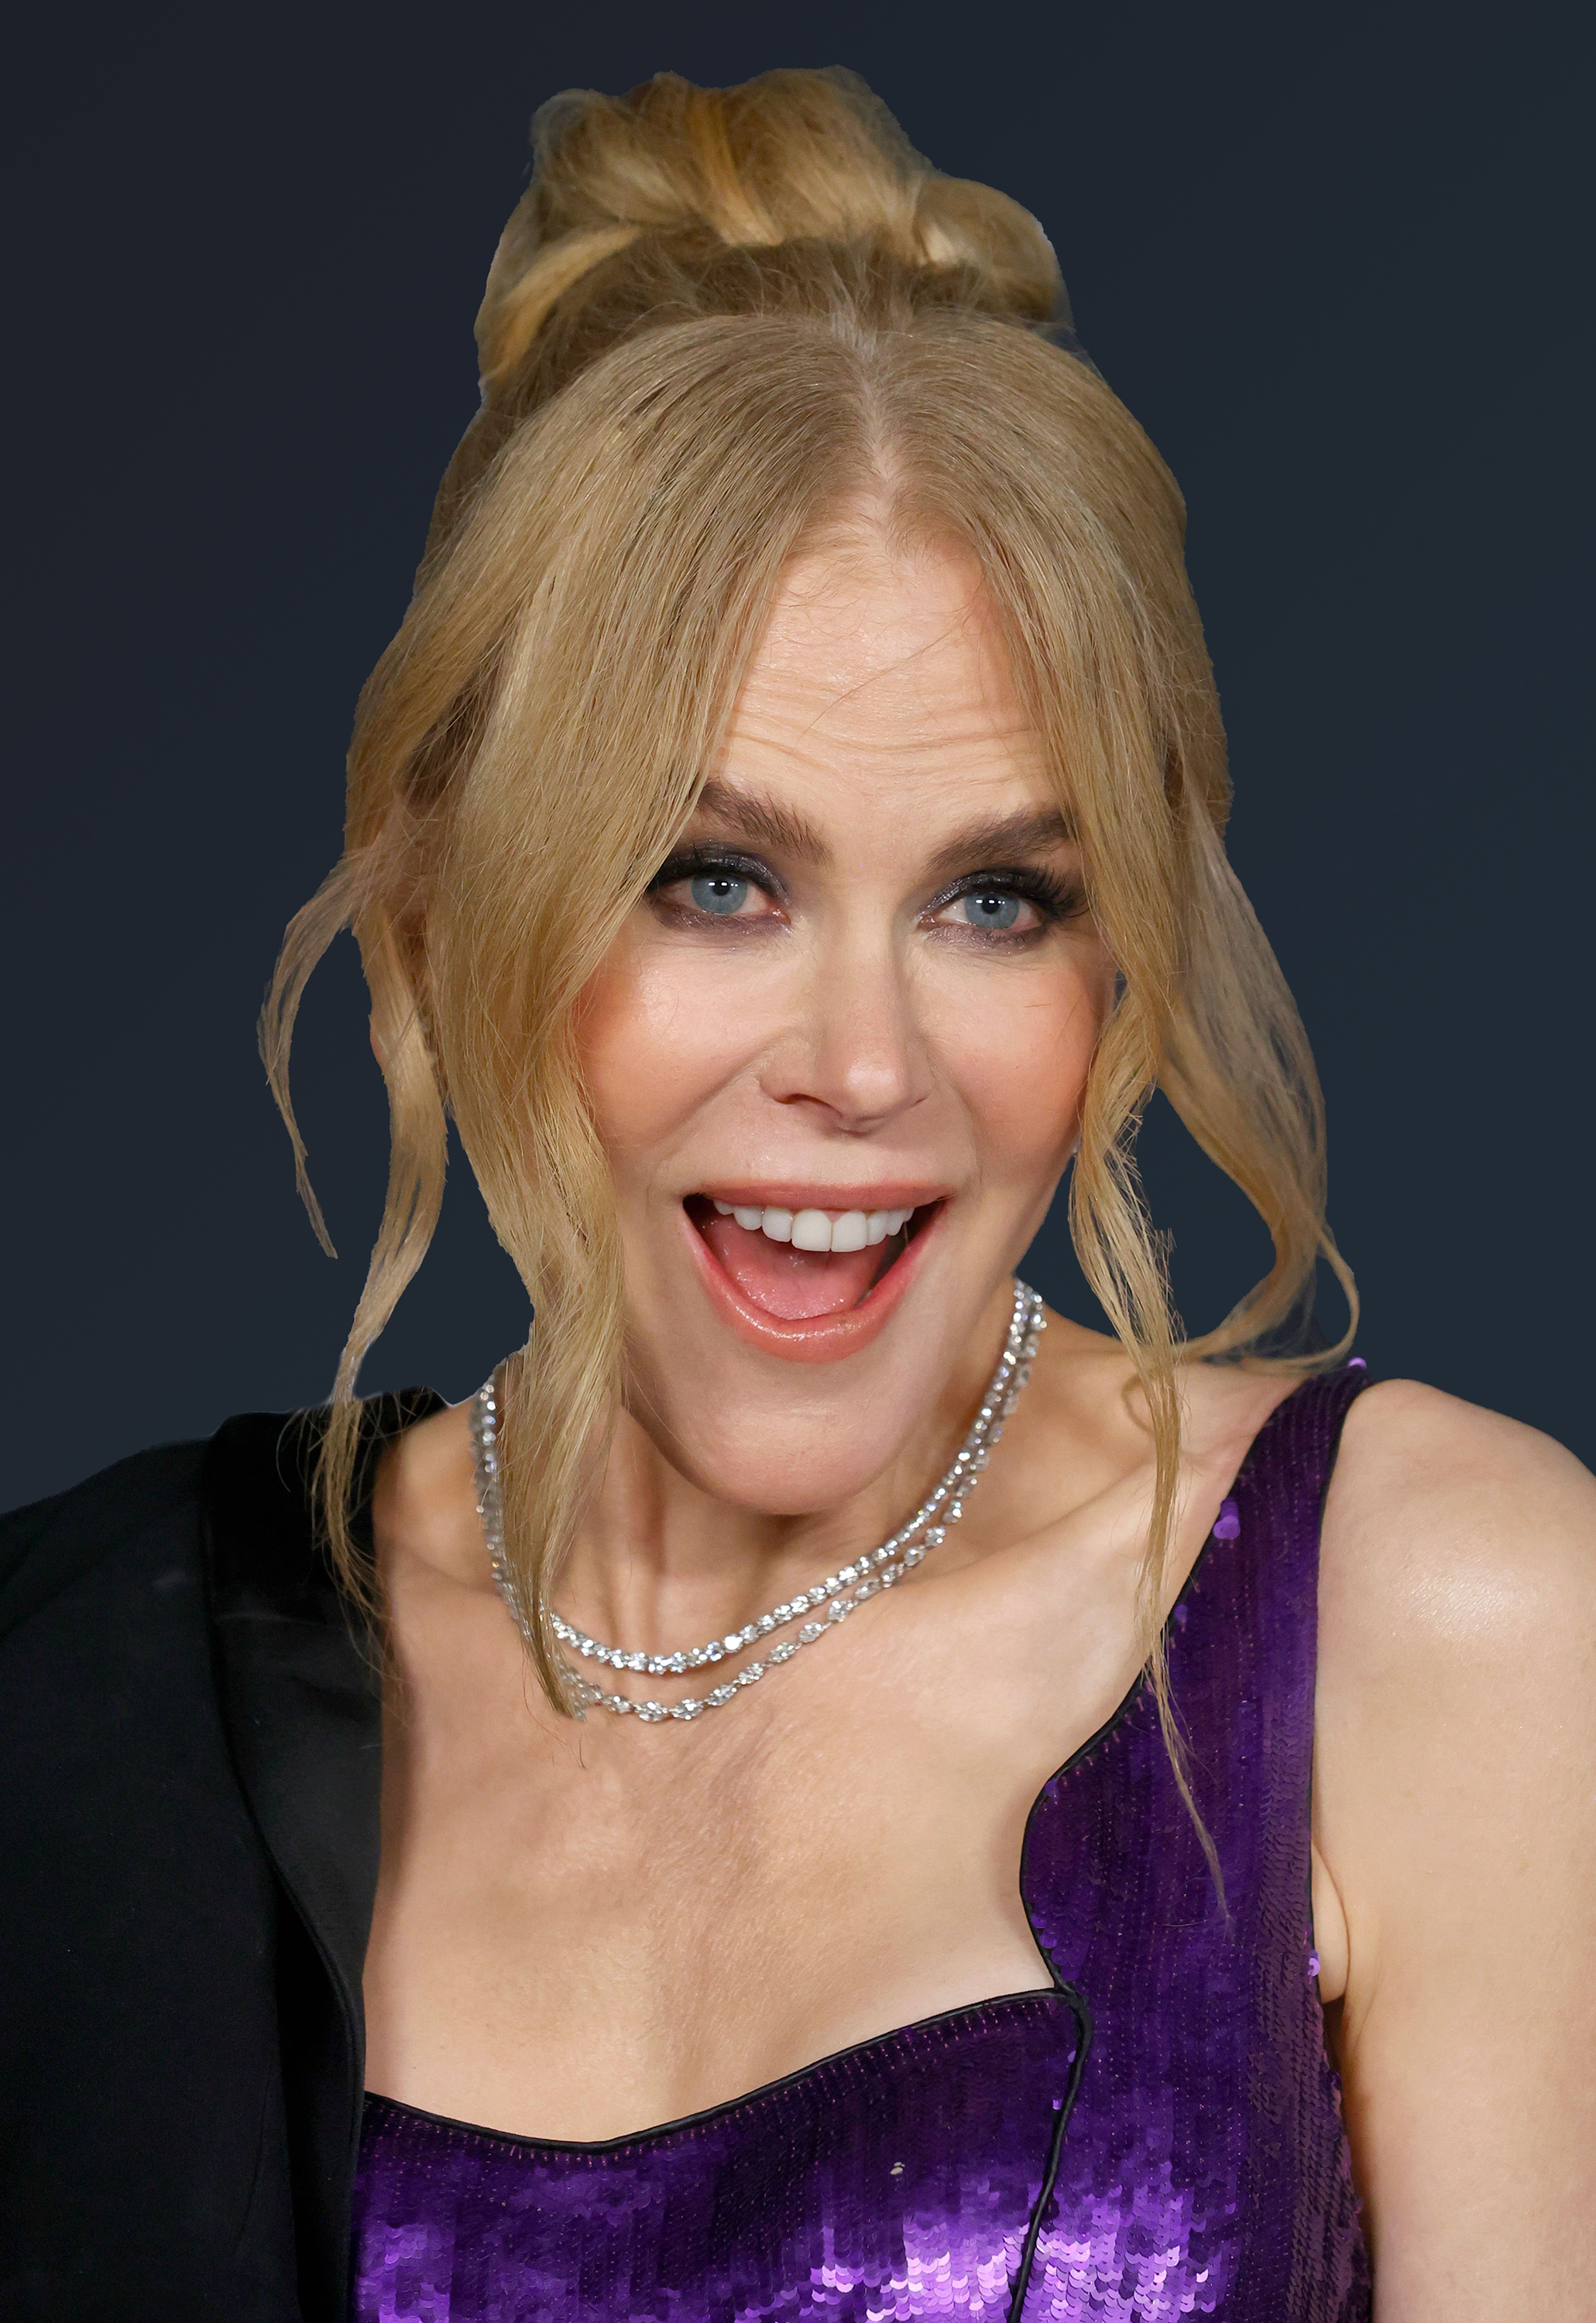 Golden Globes 2022: What The Winners Said – Nicole Kidman